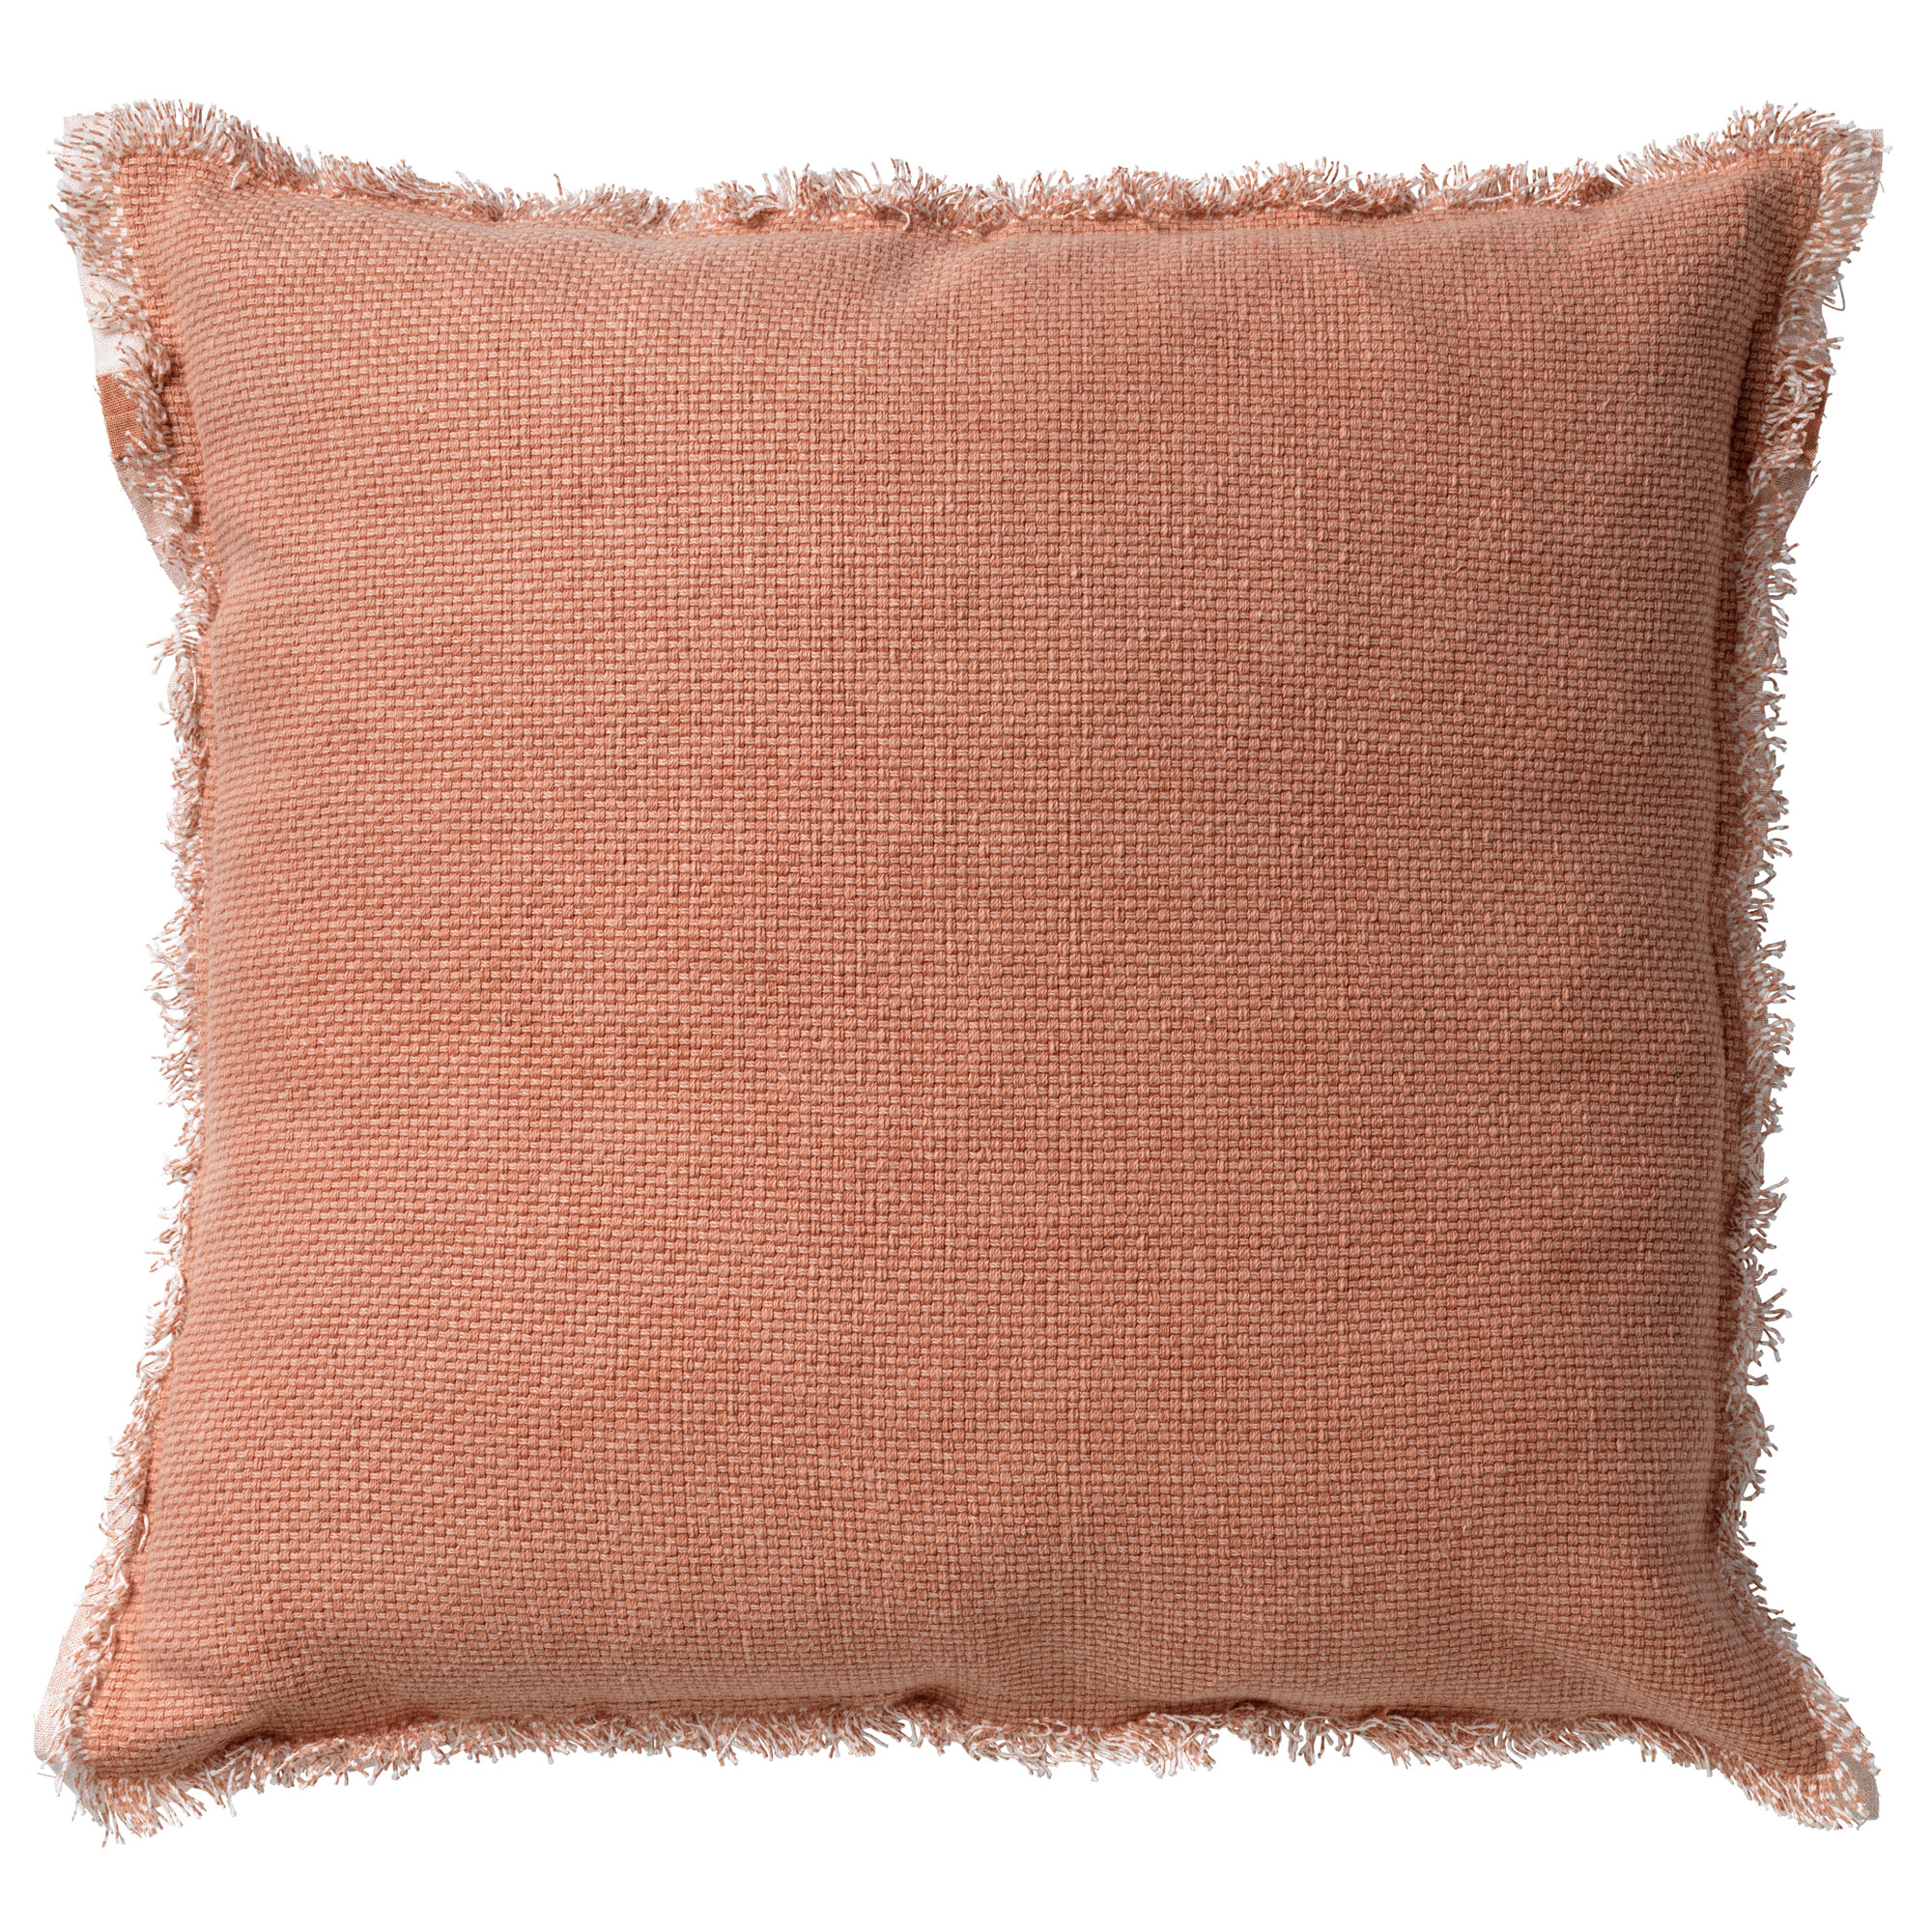 BURTO - Cushion 60x60 cm Muted Clay - pink